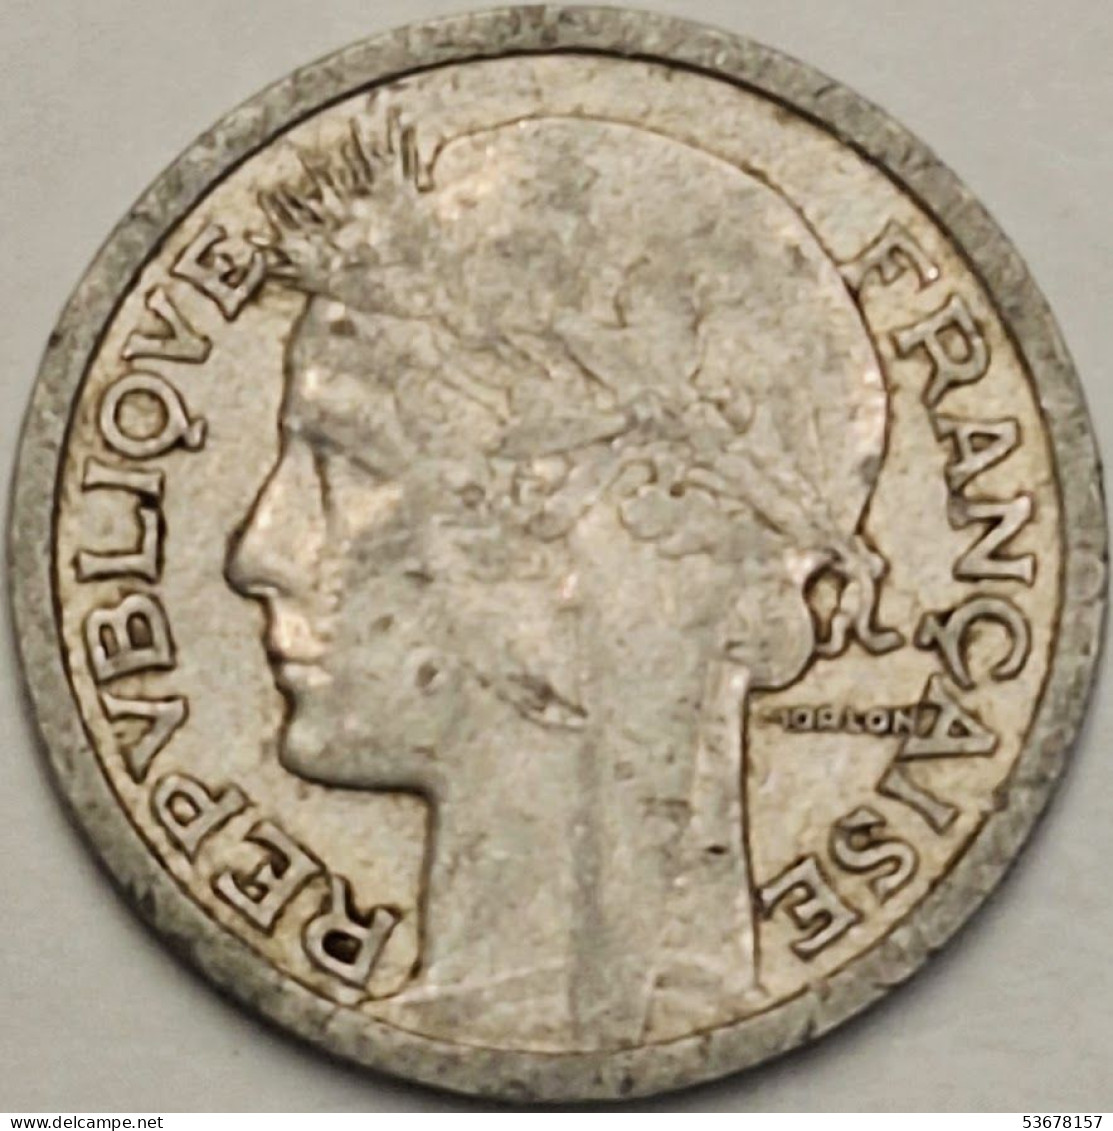 France - Franc 1946, KM# 885a.1 (#4083) - 1 Franc